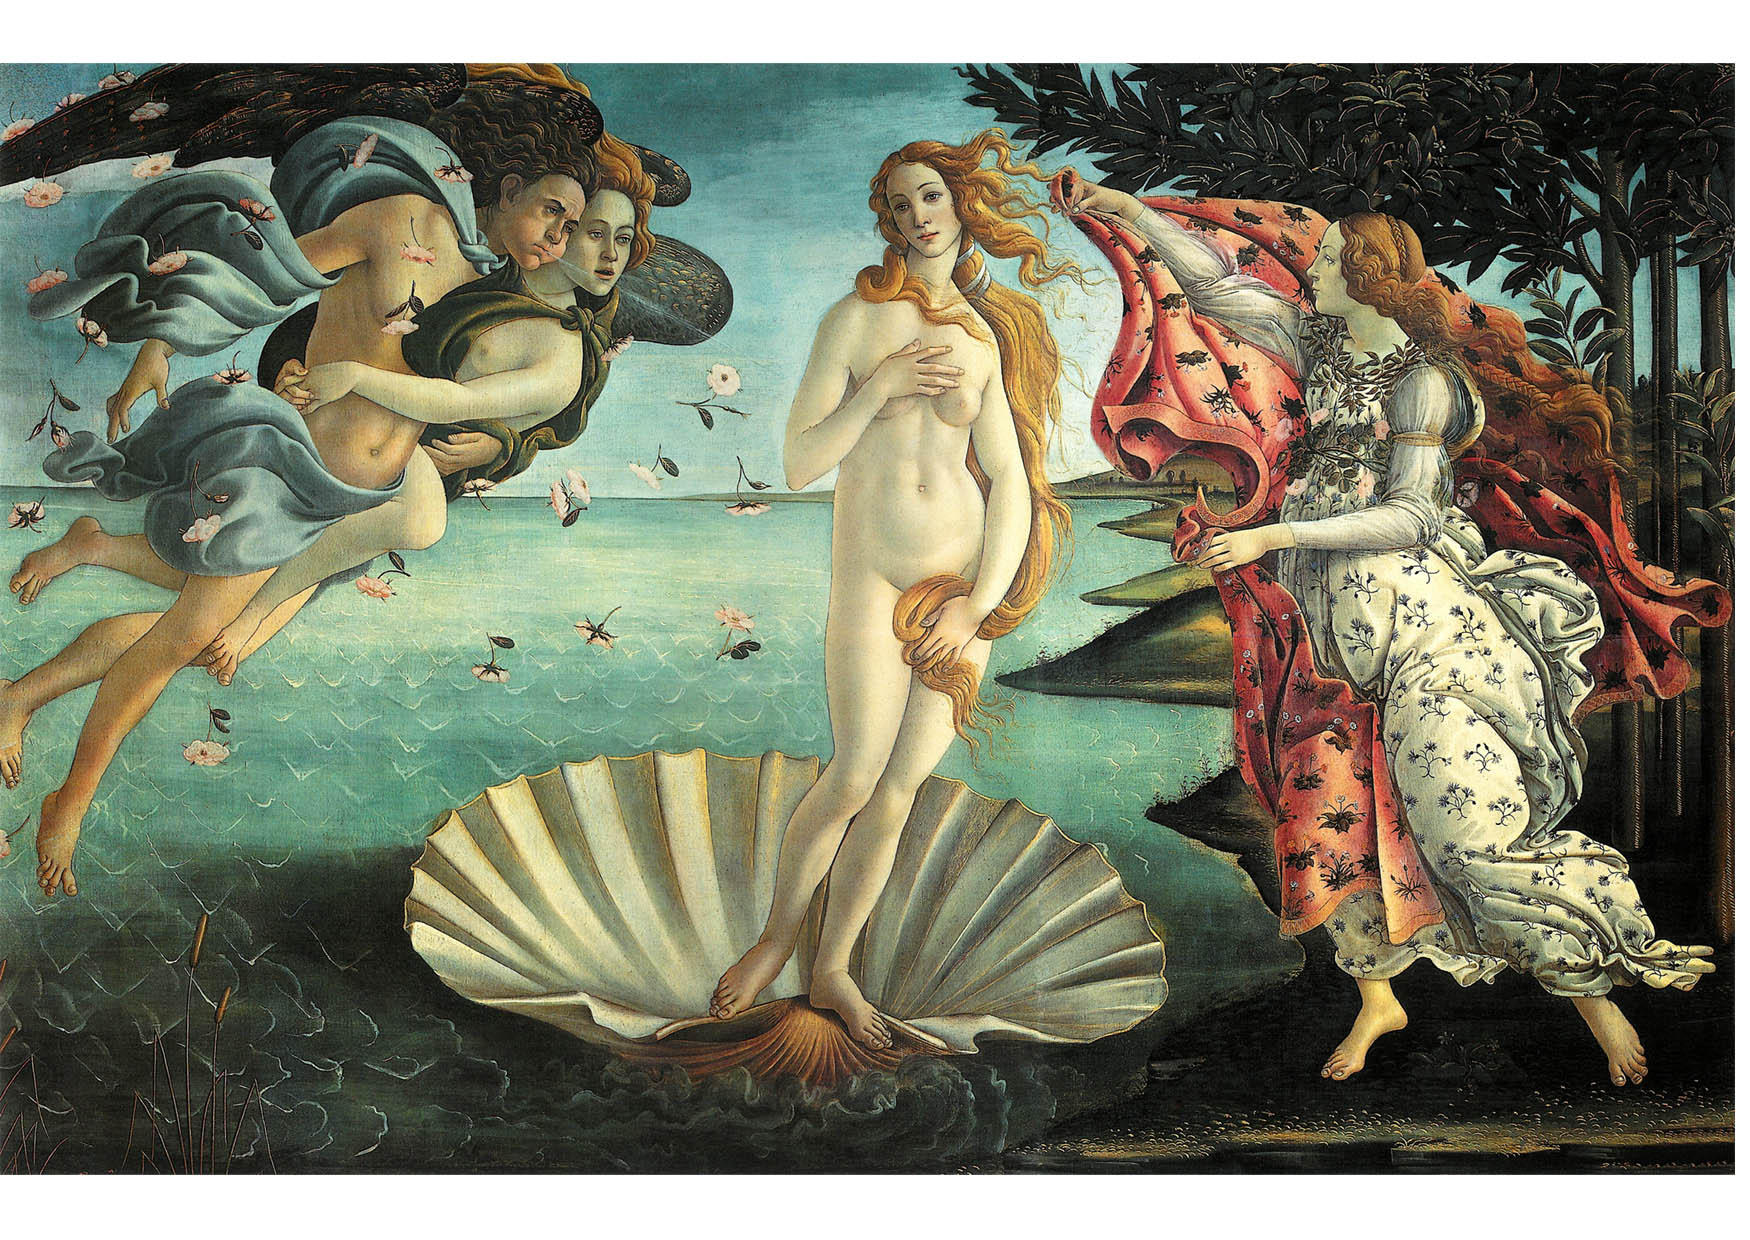 Image The Birth of Venus.